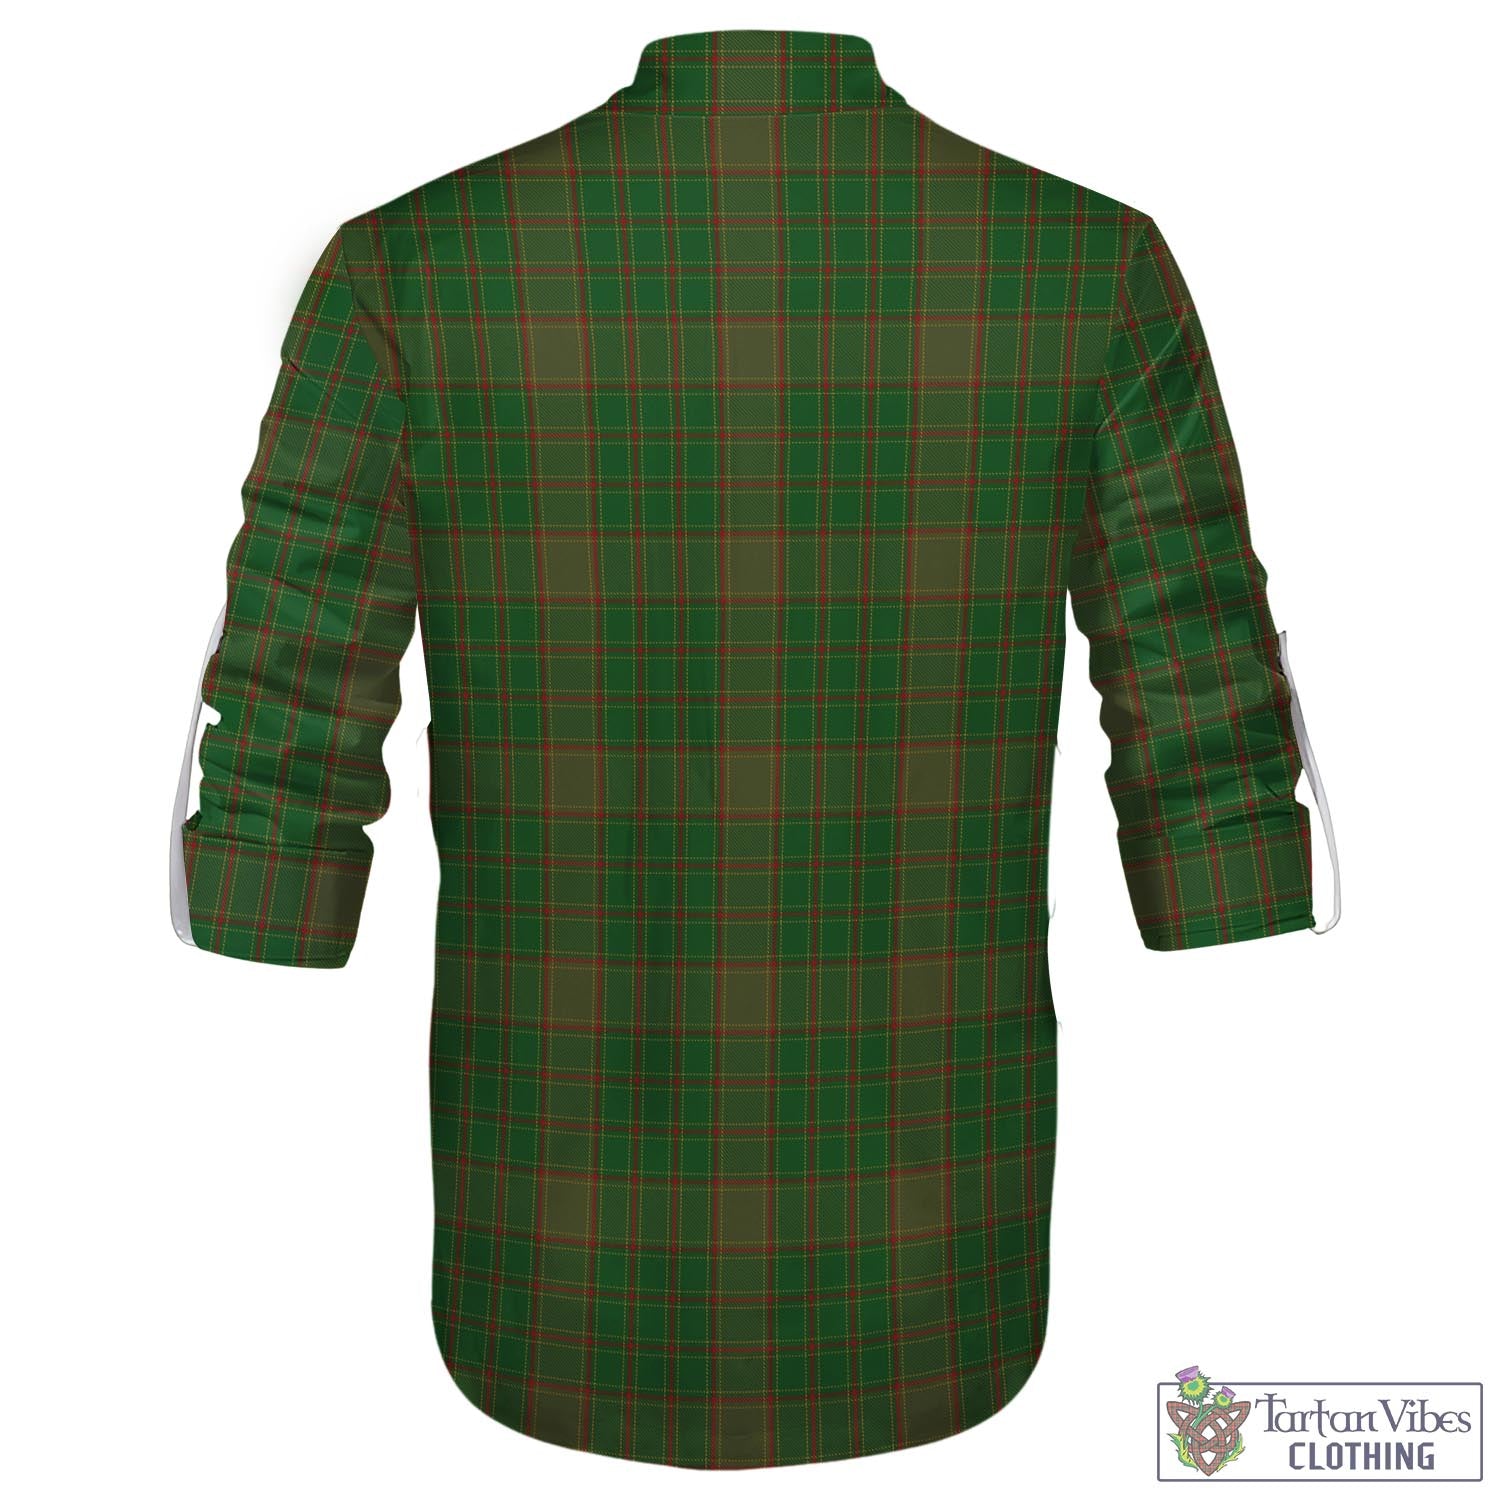 Tartan Vibes Clothing Terry Tartan Men's Scottish Traditional Jacobite Ghillie Kilt Shirt